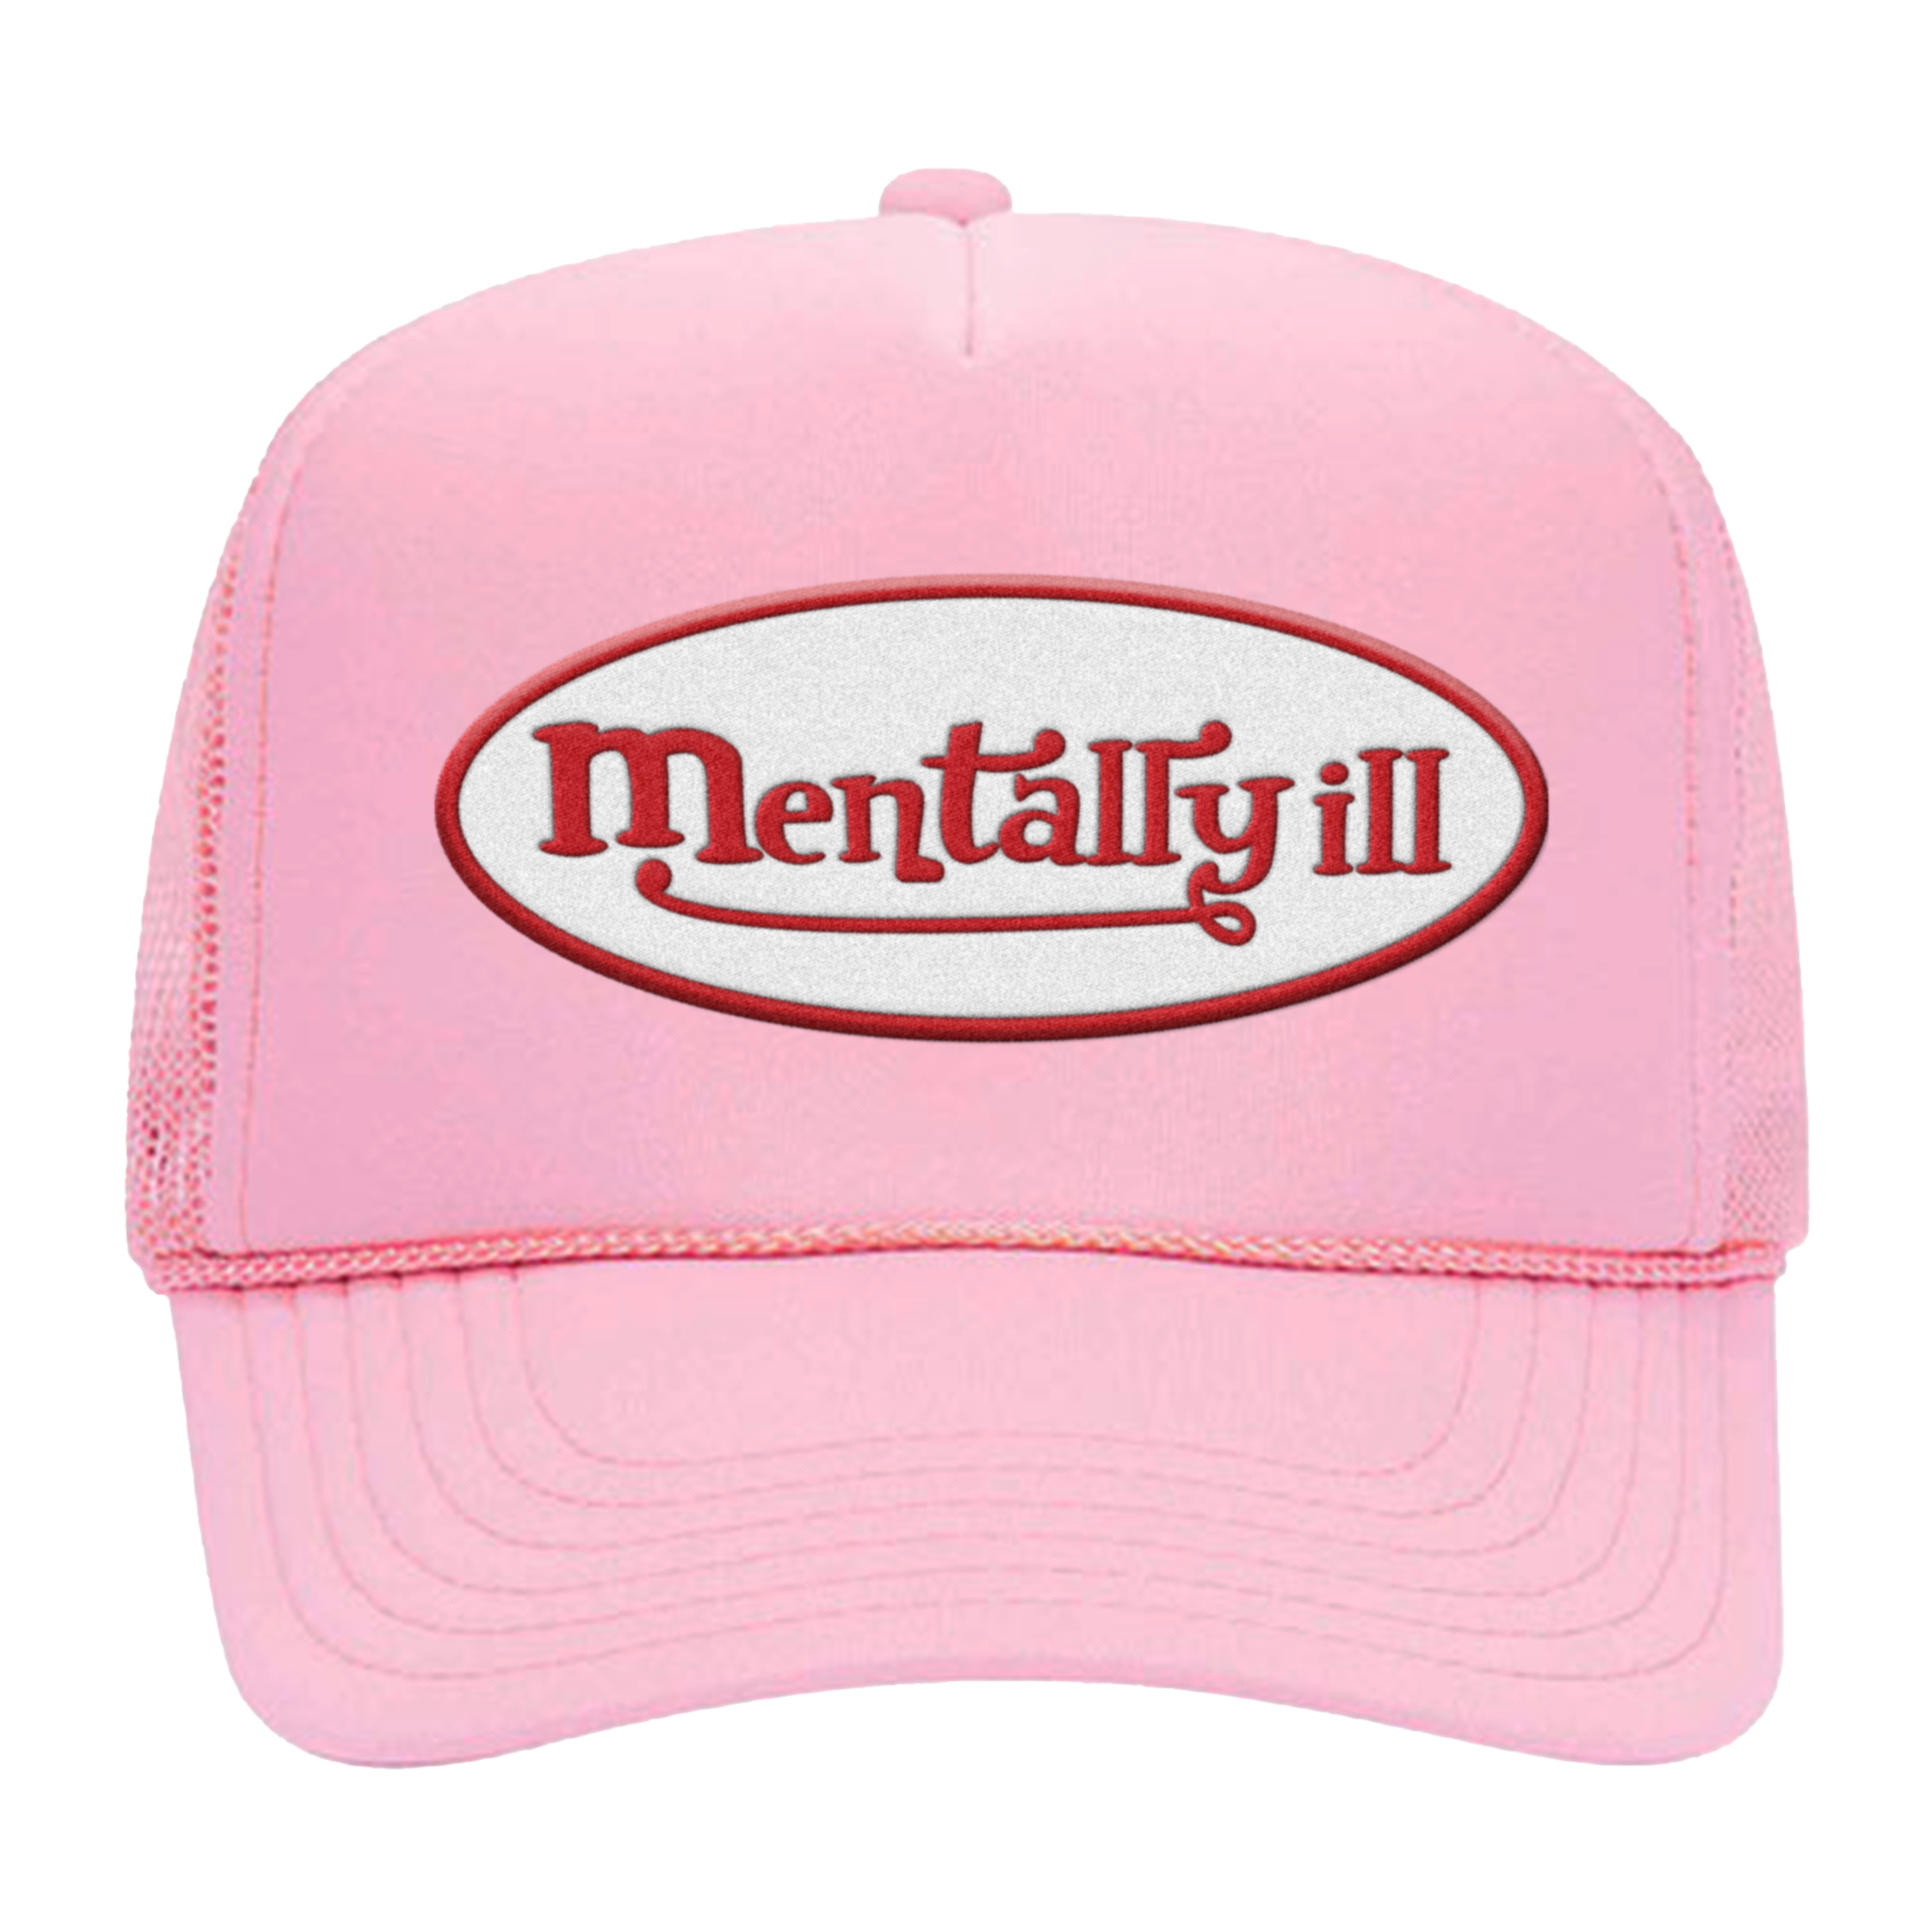 Aryia - Mentally Ill Trucker Hat (Pink)